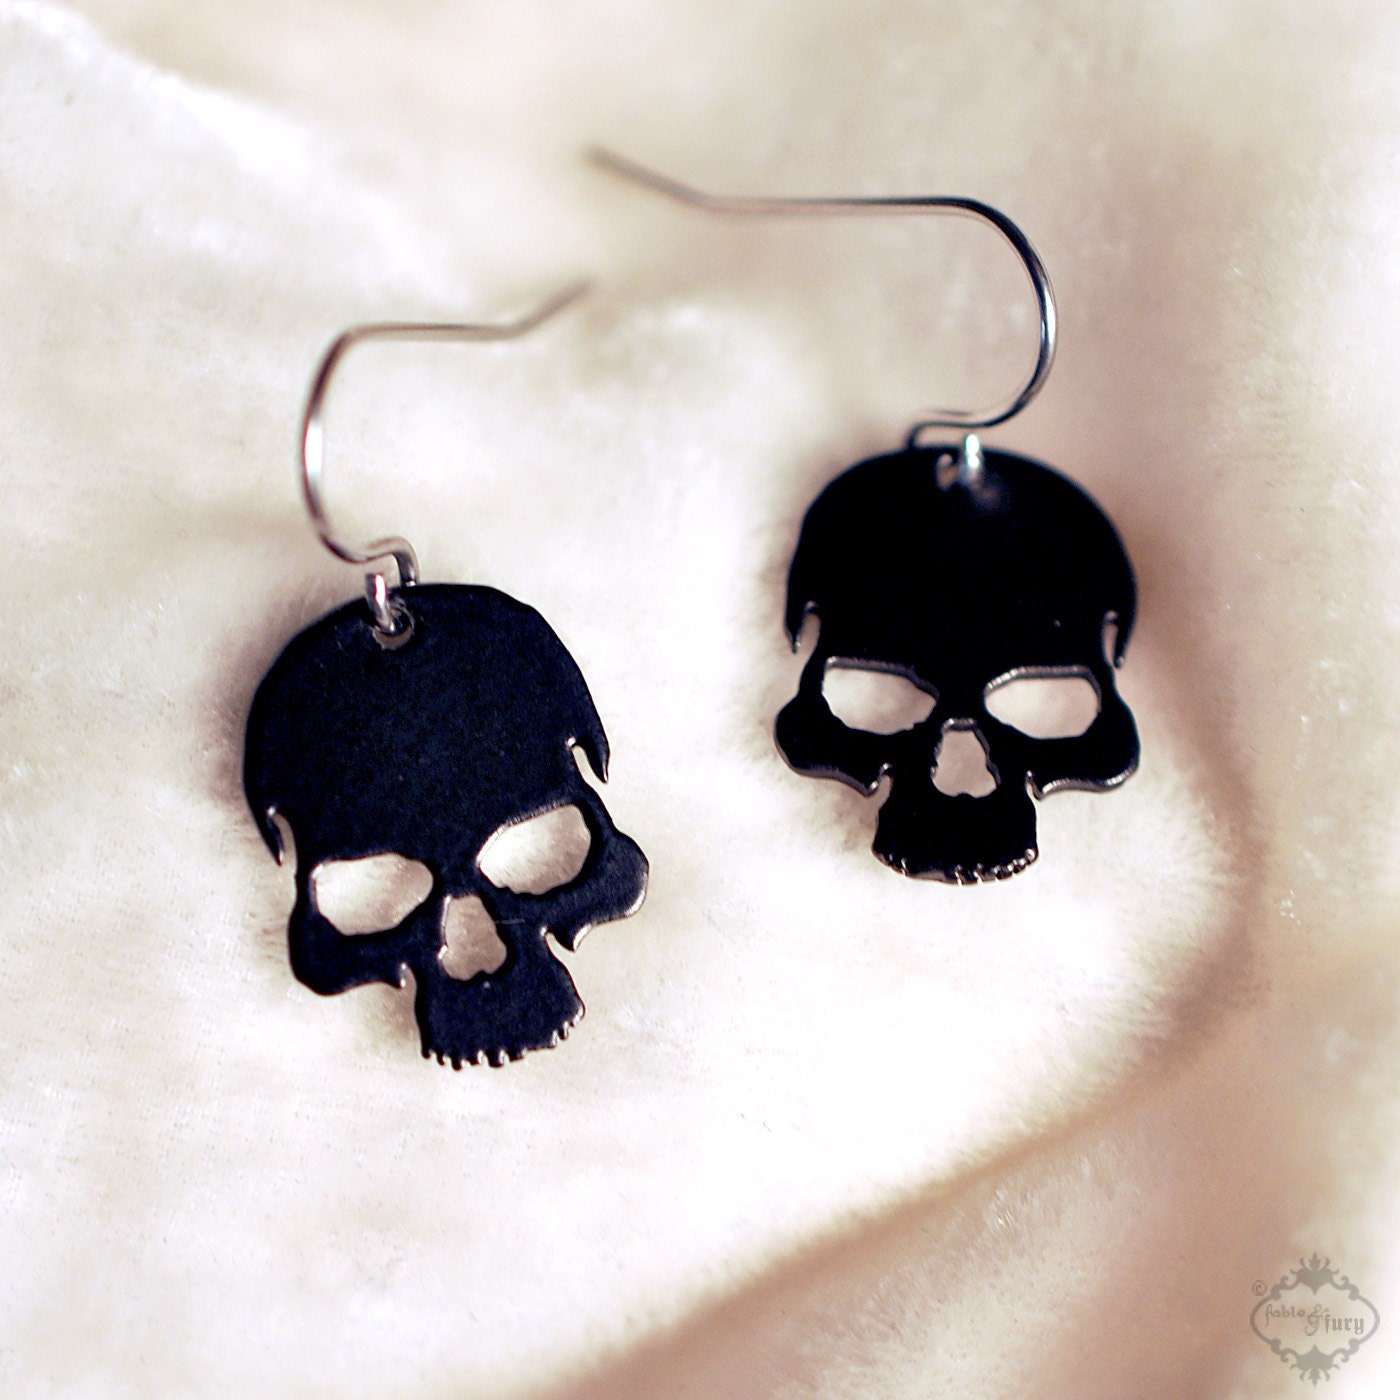 Dangle Black Skull earrings in finish stainless by FableAndFury